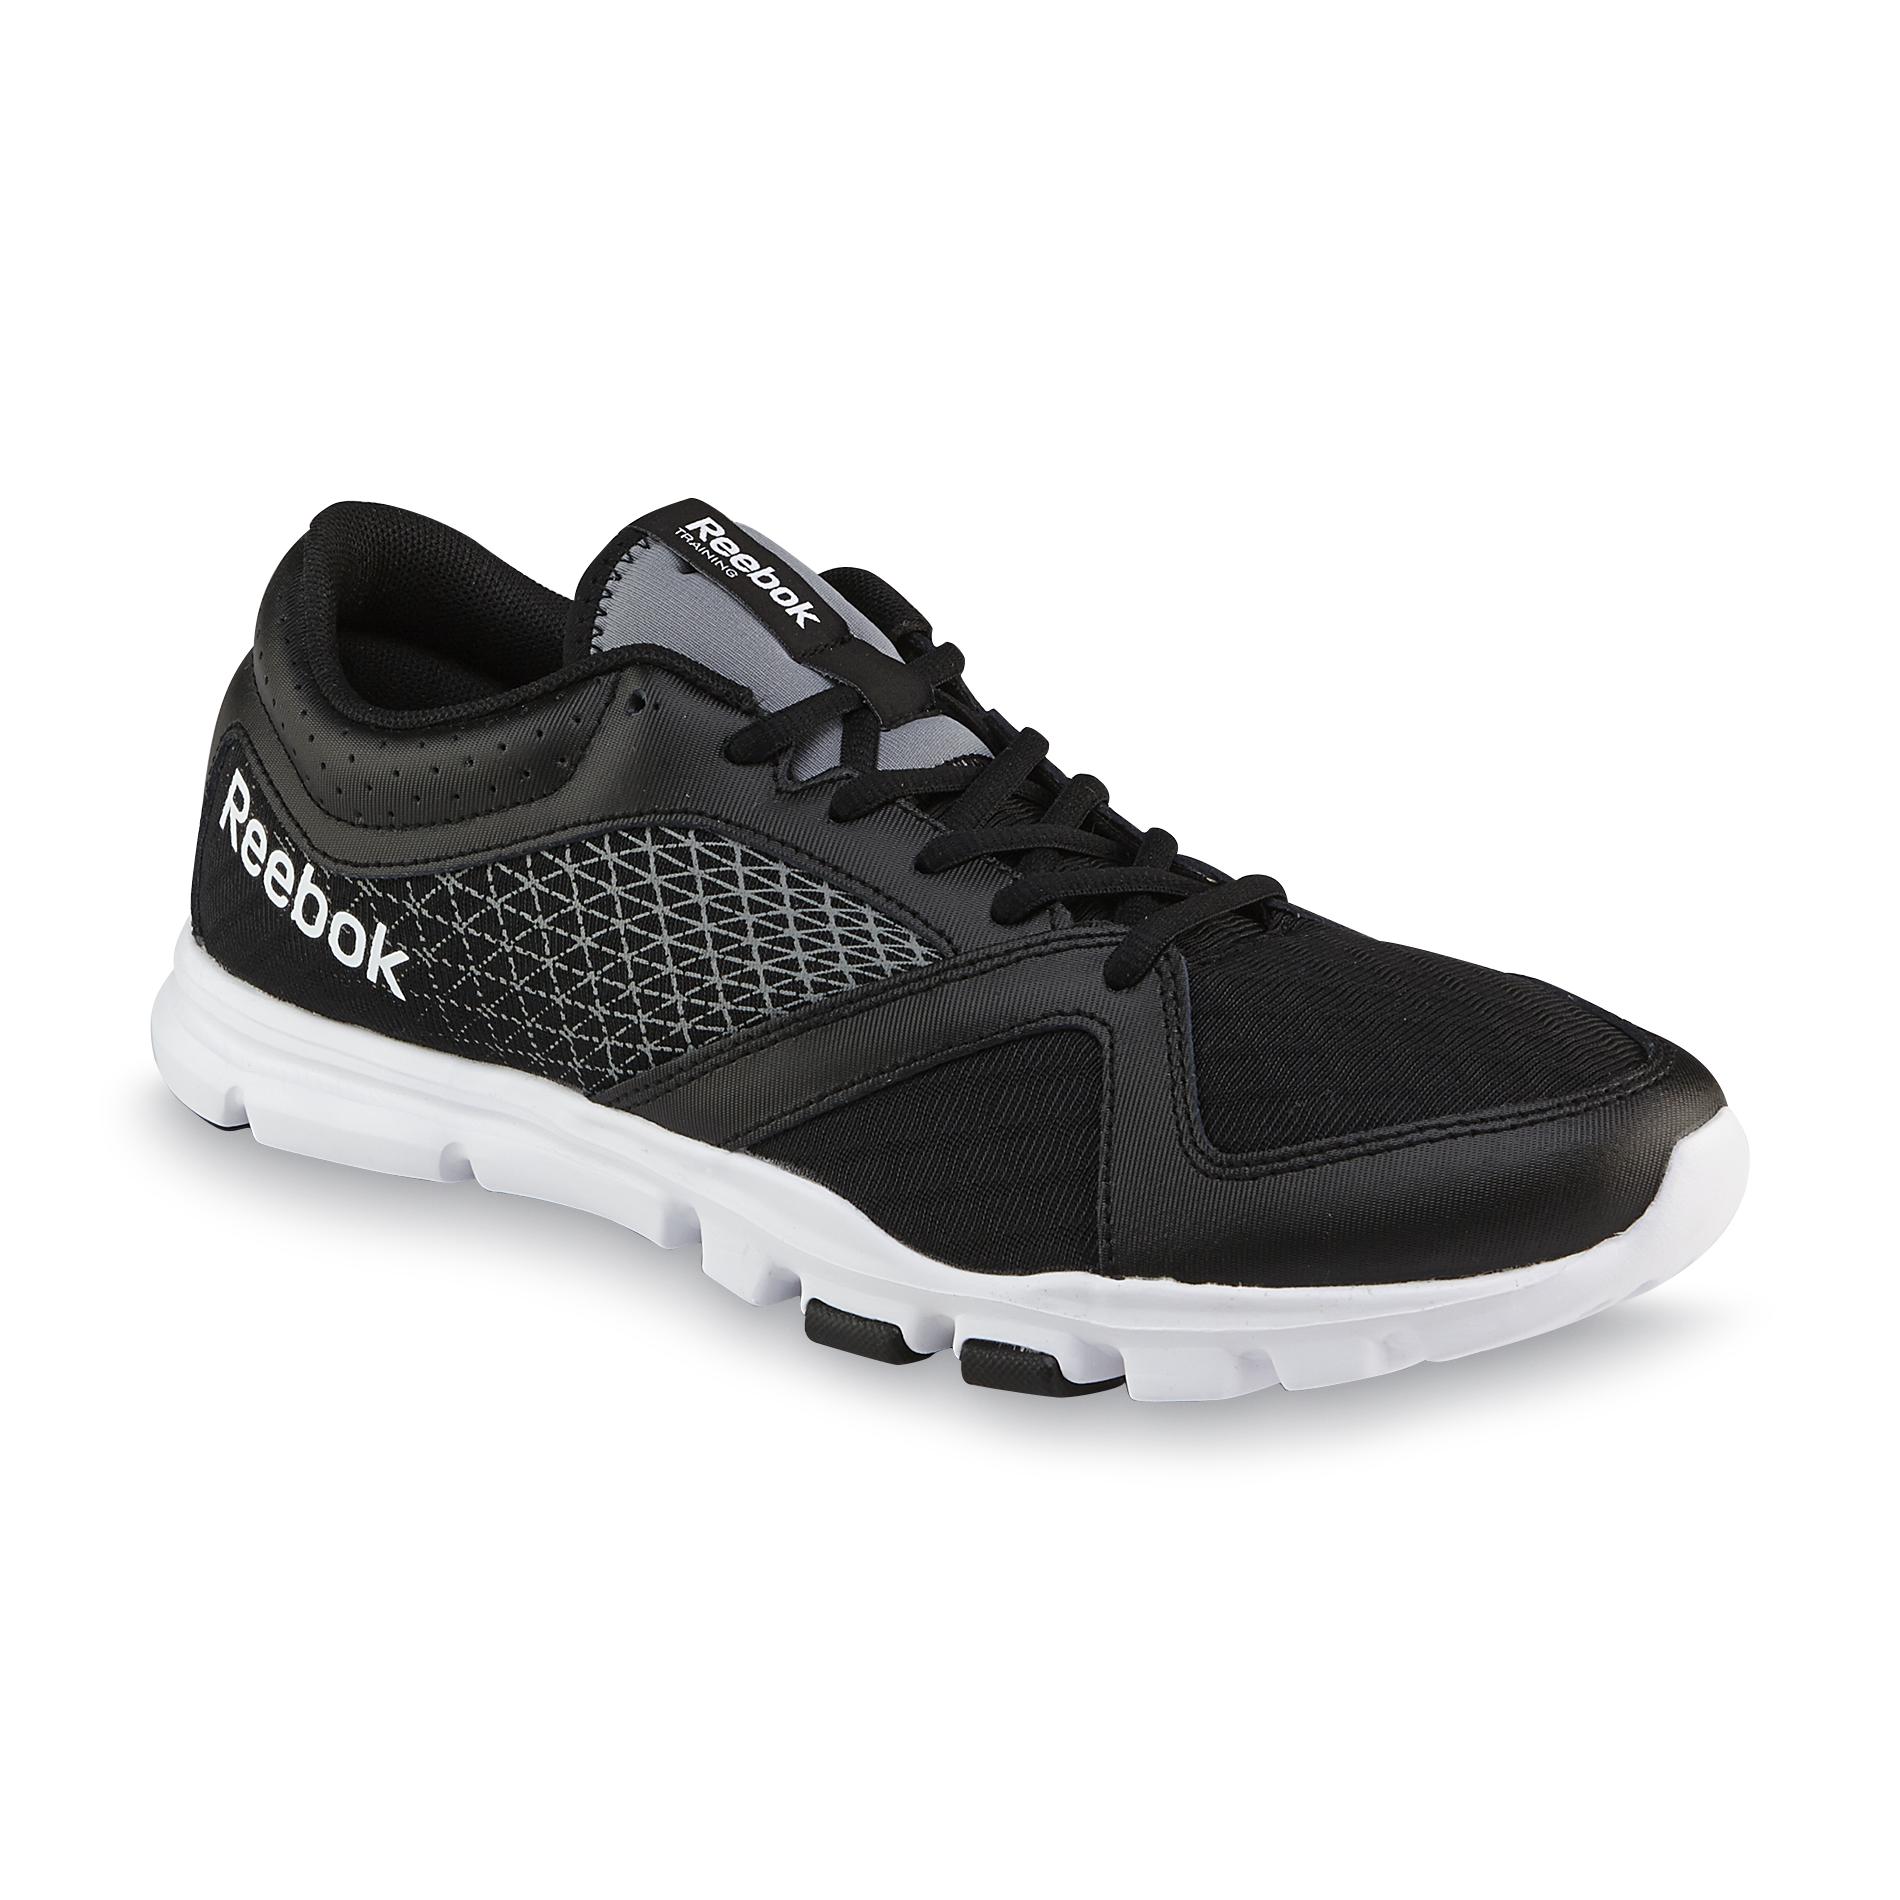 Reebok Men's YourFlex Train 7.0 LMT Athletic Shoe - Black